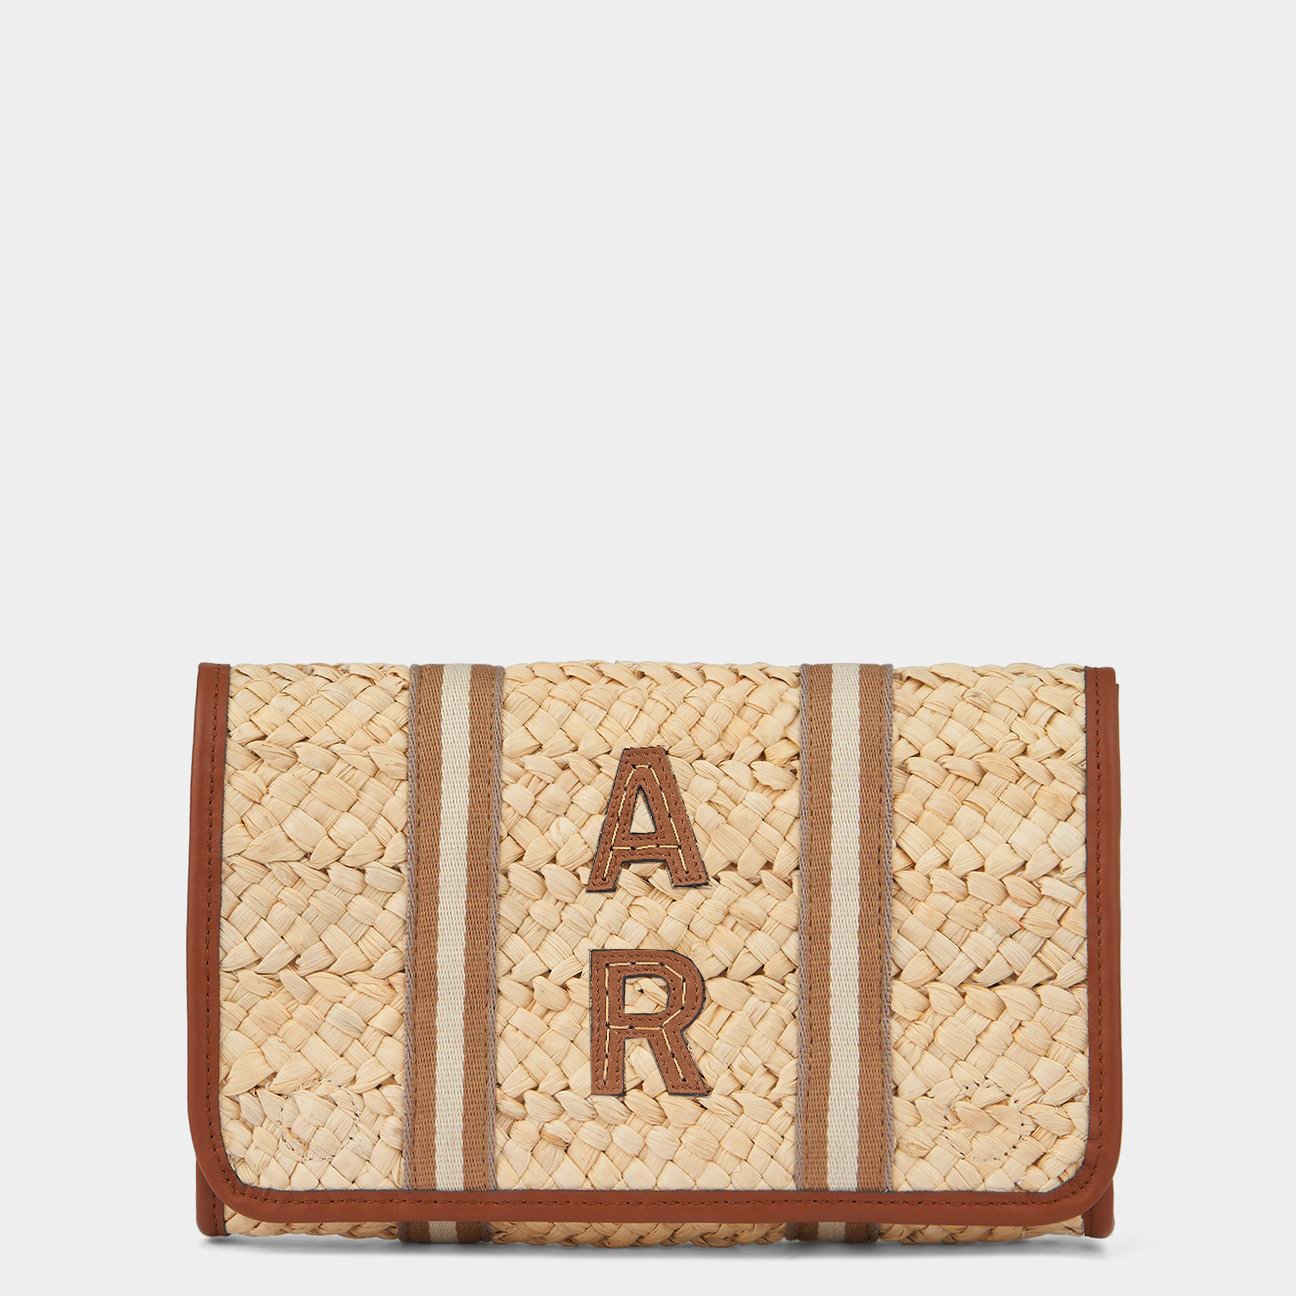 Louis Vuitton Straws and Pouch Monogram Case 